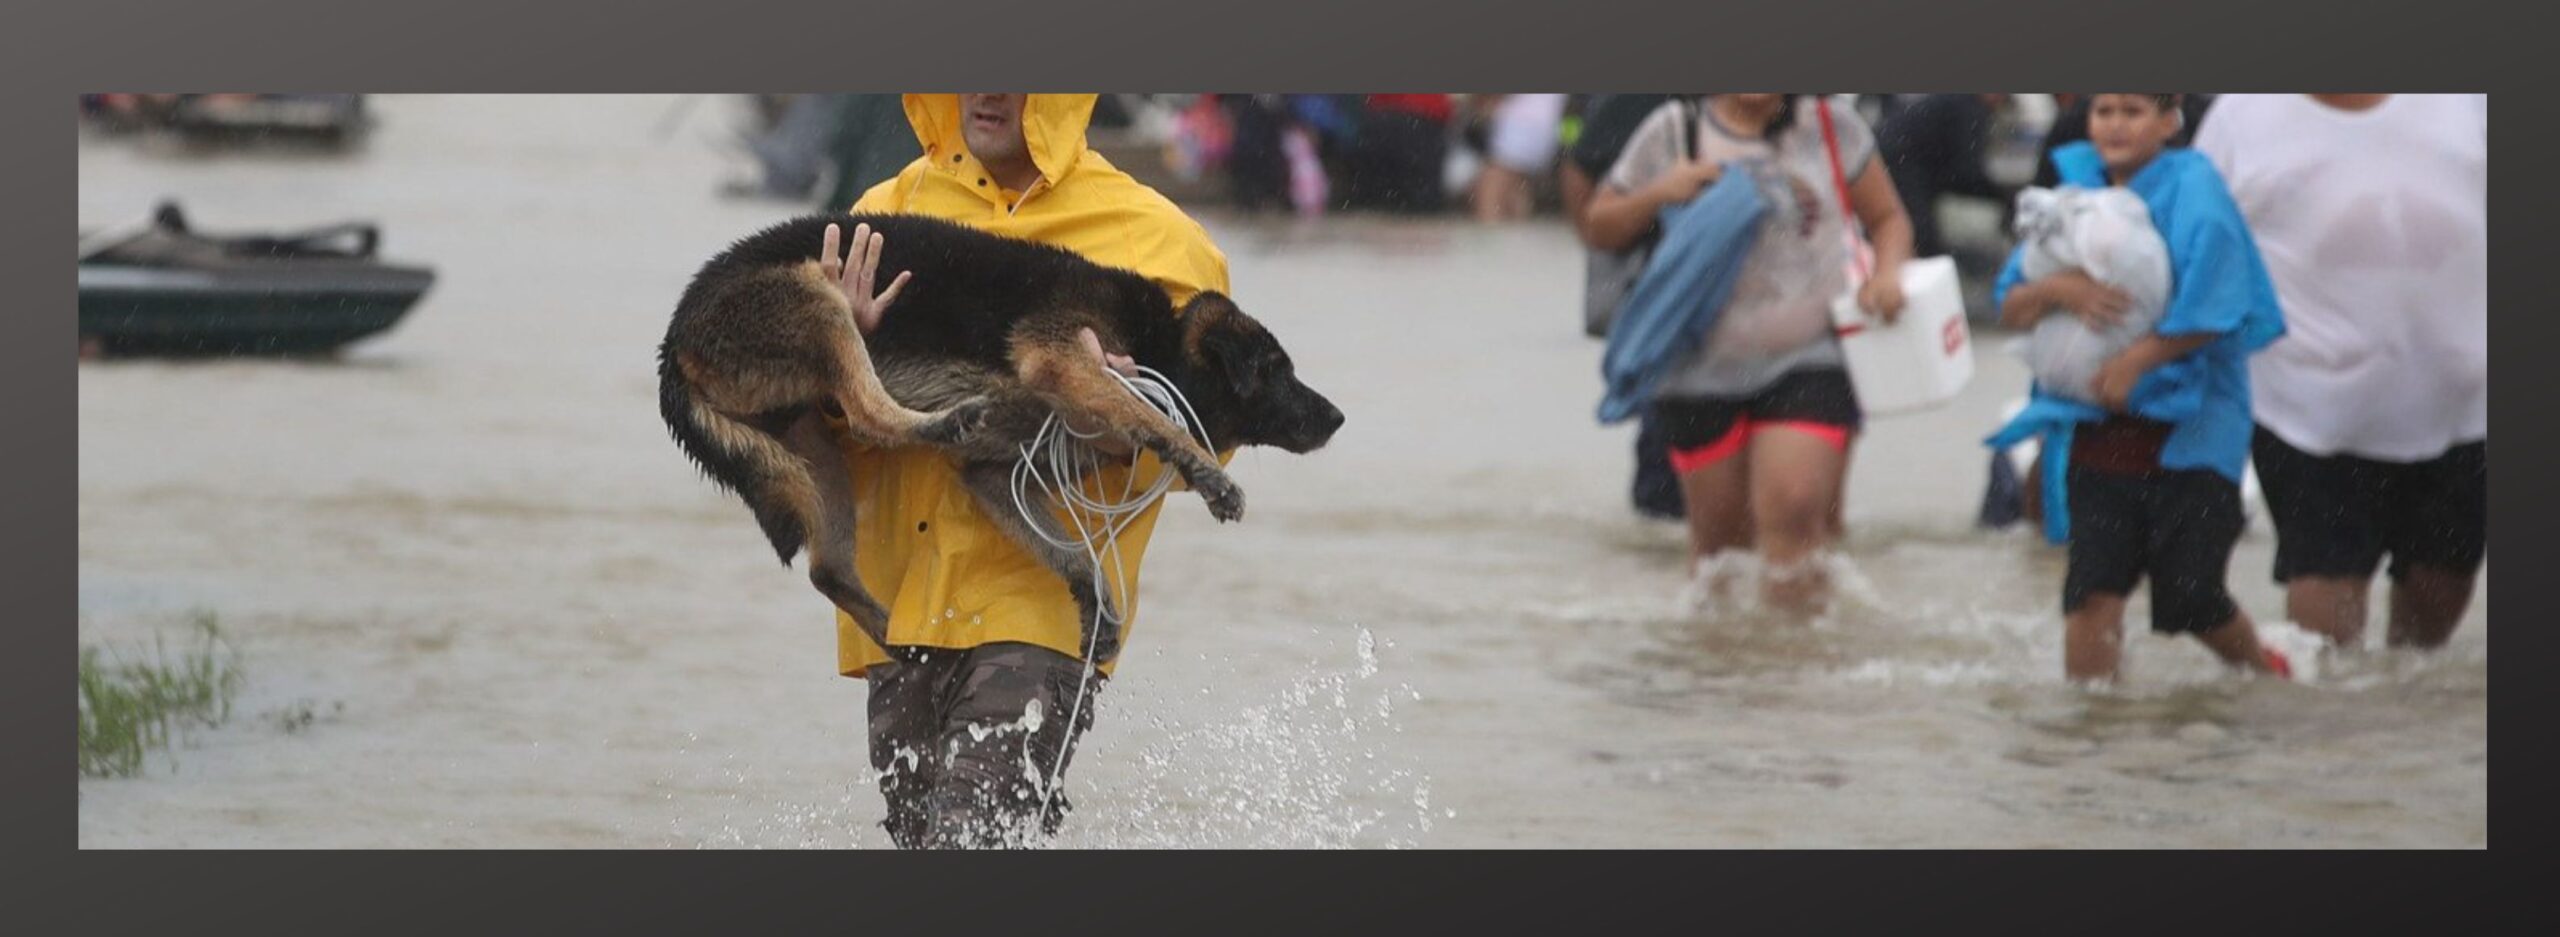 Evacuating with dog